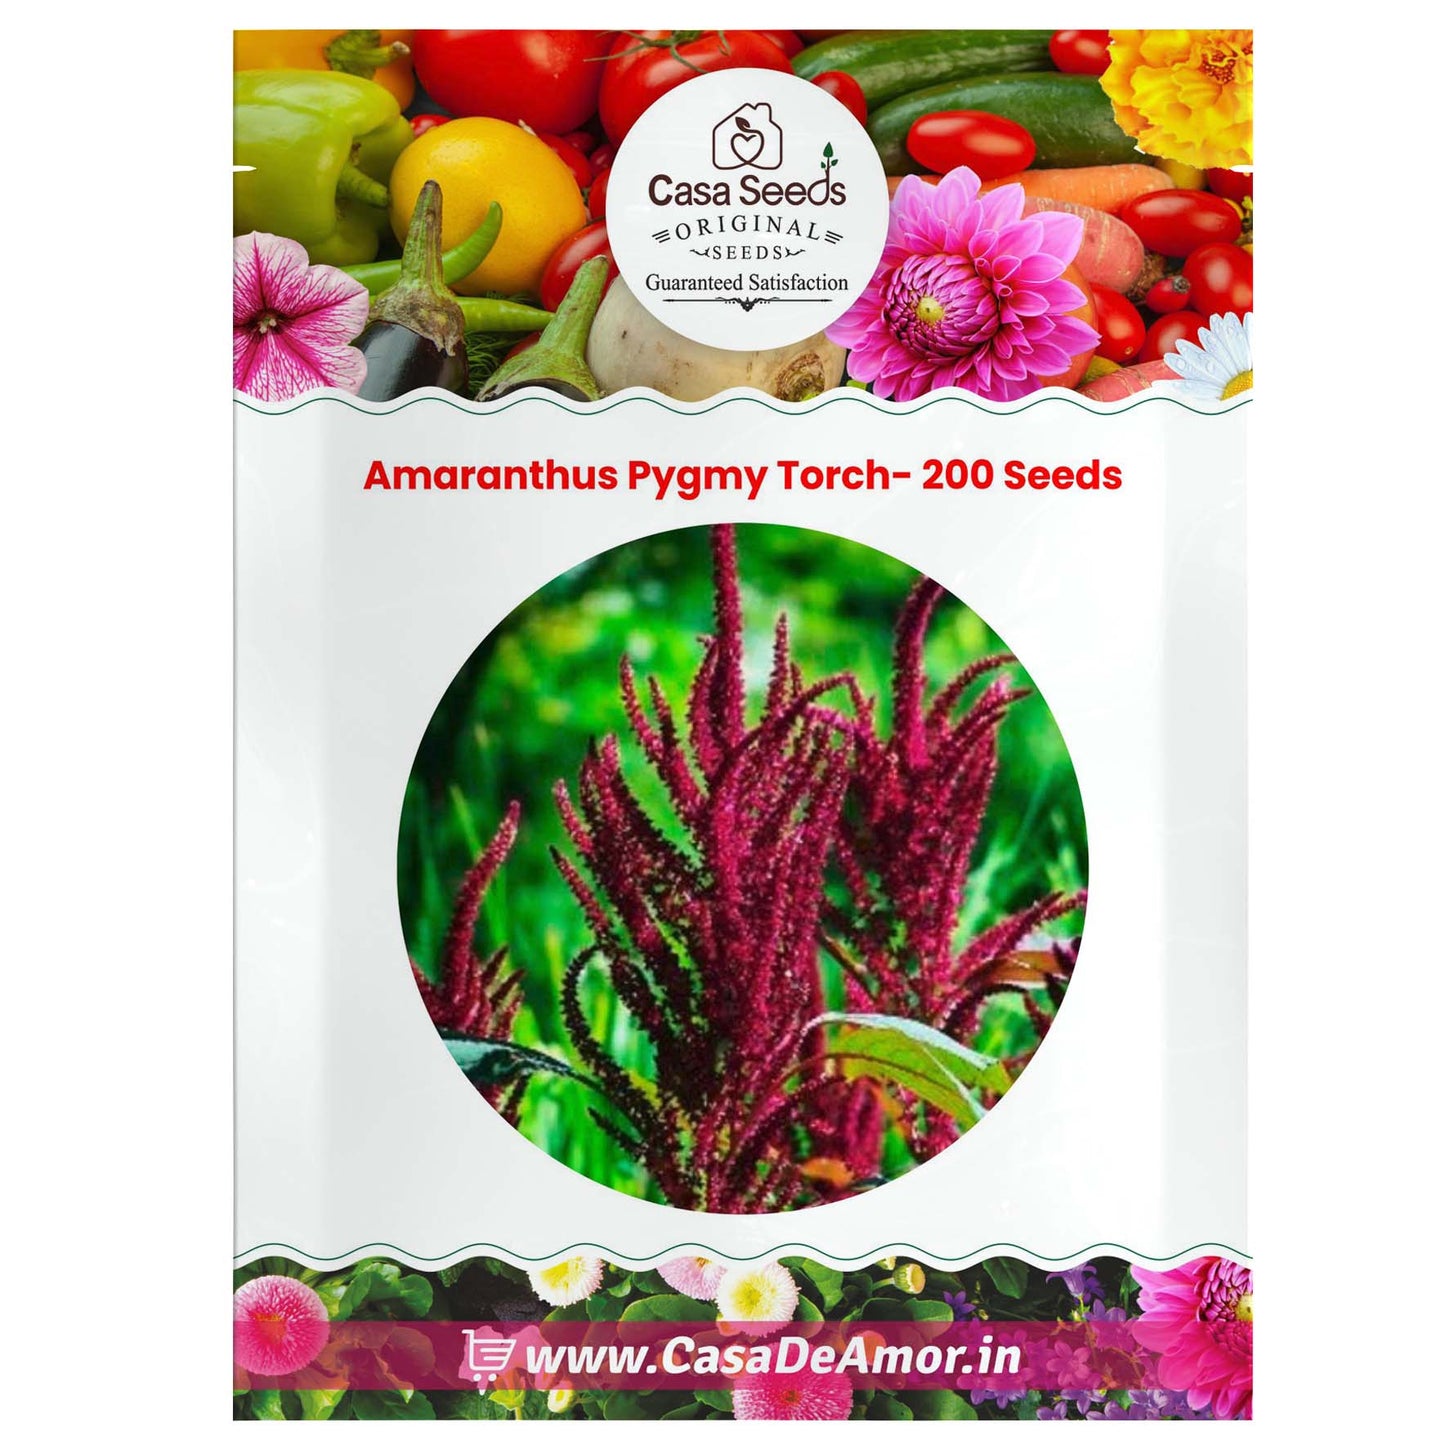 Amaranthus Pygmy Torch- 200 Seeds